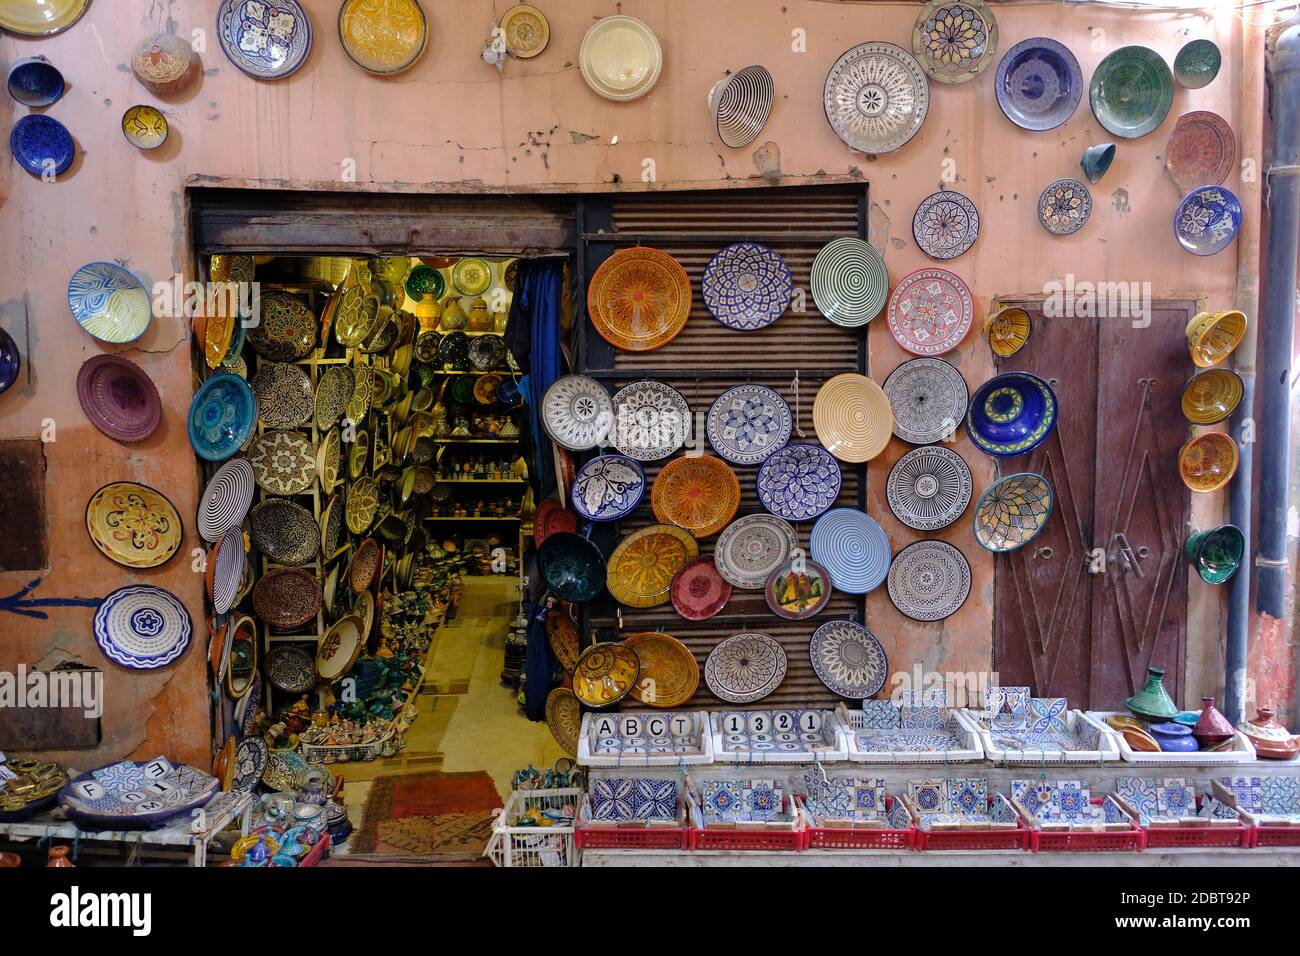 Morocco Marrakesh - Colorful Moroccan handmade ceramic plate shop Stock Photo